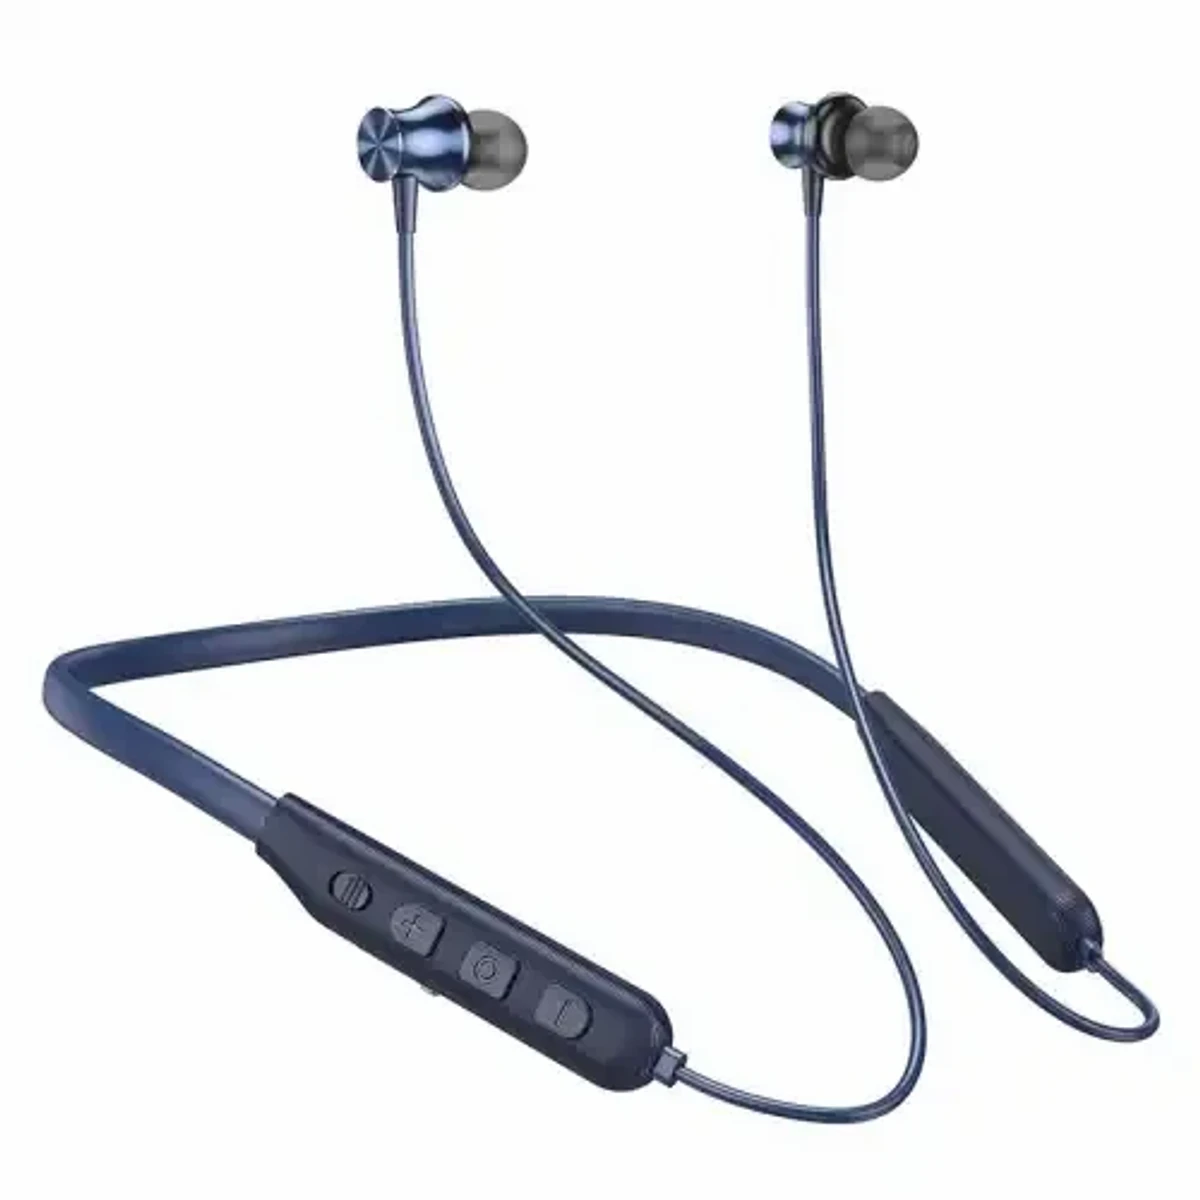 UiiSii N13 Neckband Bluetooth Earphone